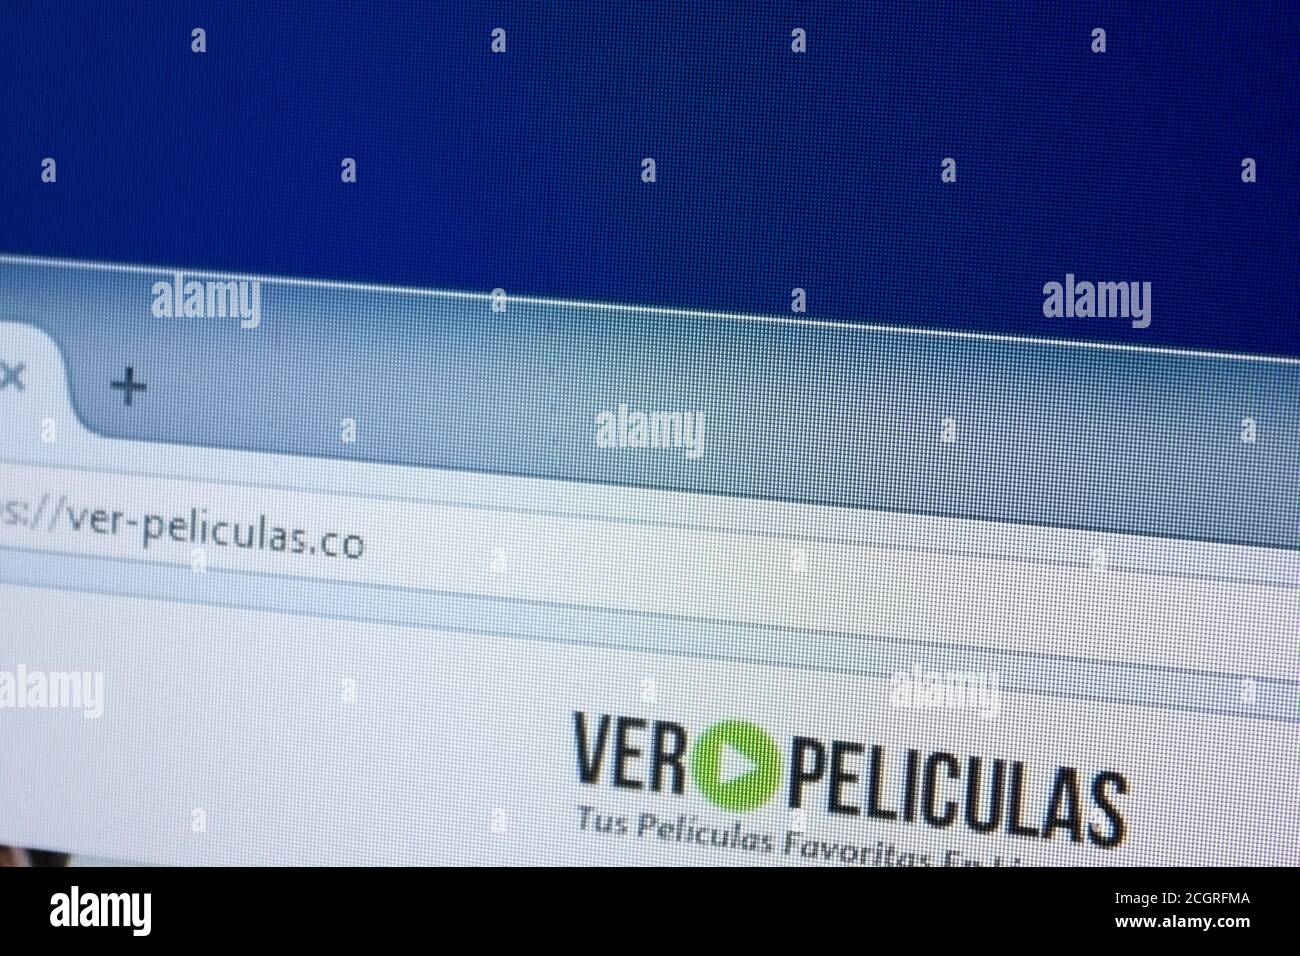 Ryazan, Russia - September 09, 2018: Homepage of Ver-peliculas website on the display of PC, url - Ver-peliculas.co. Stock Photo